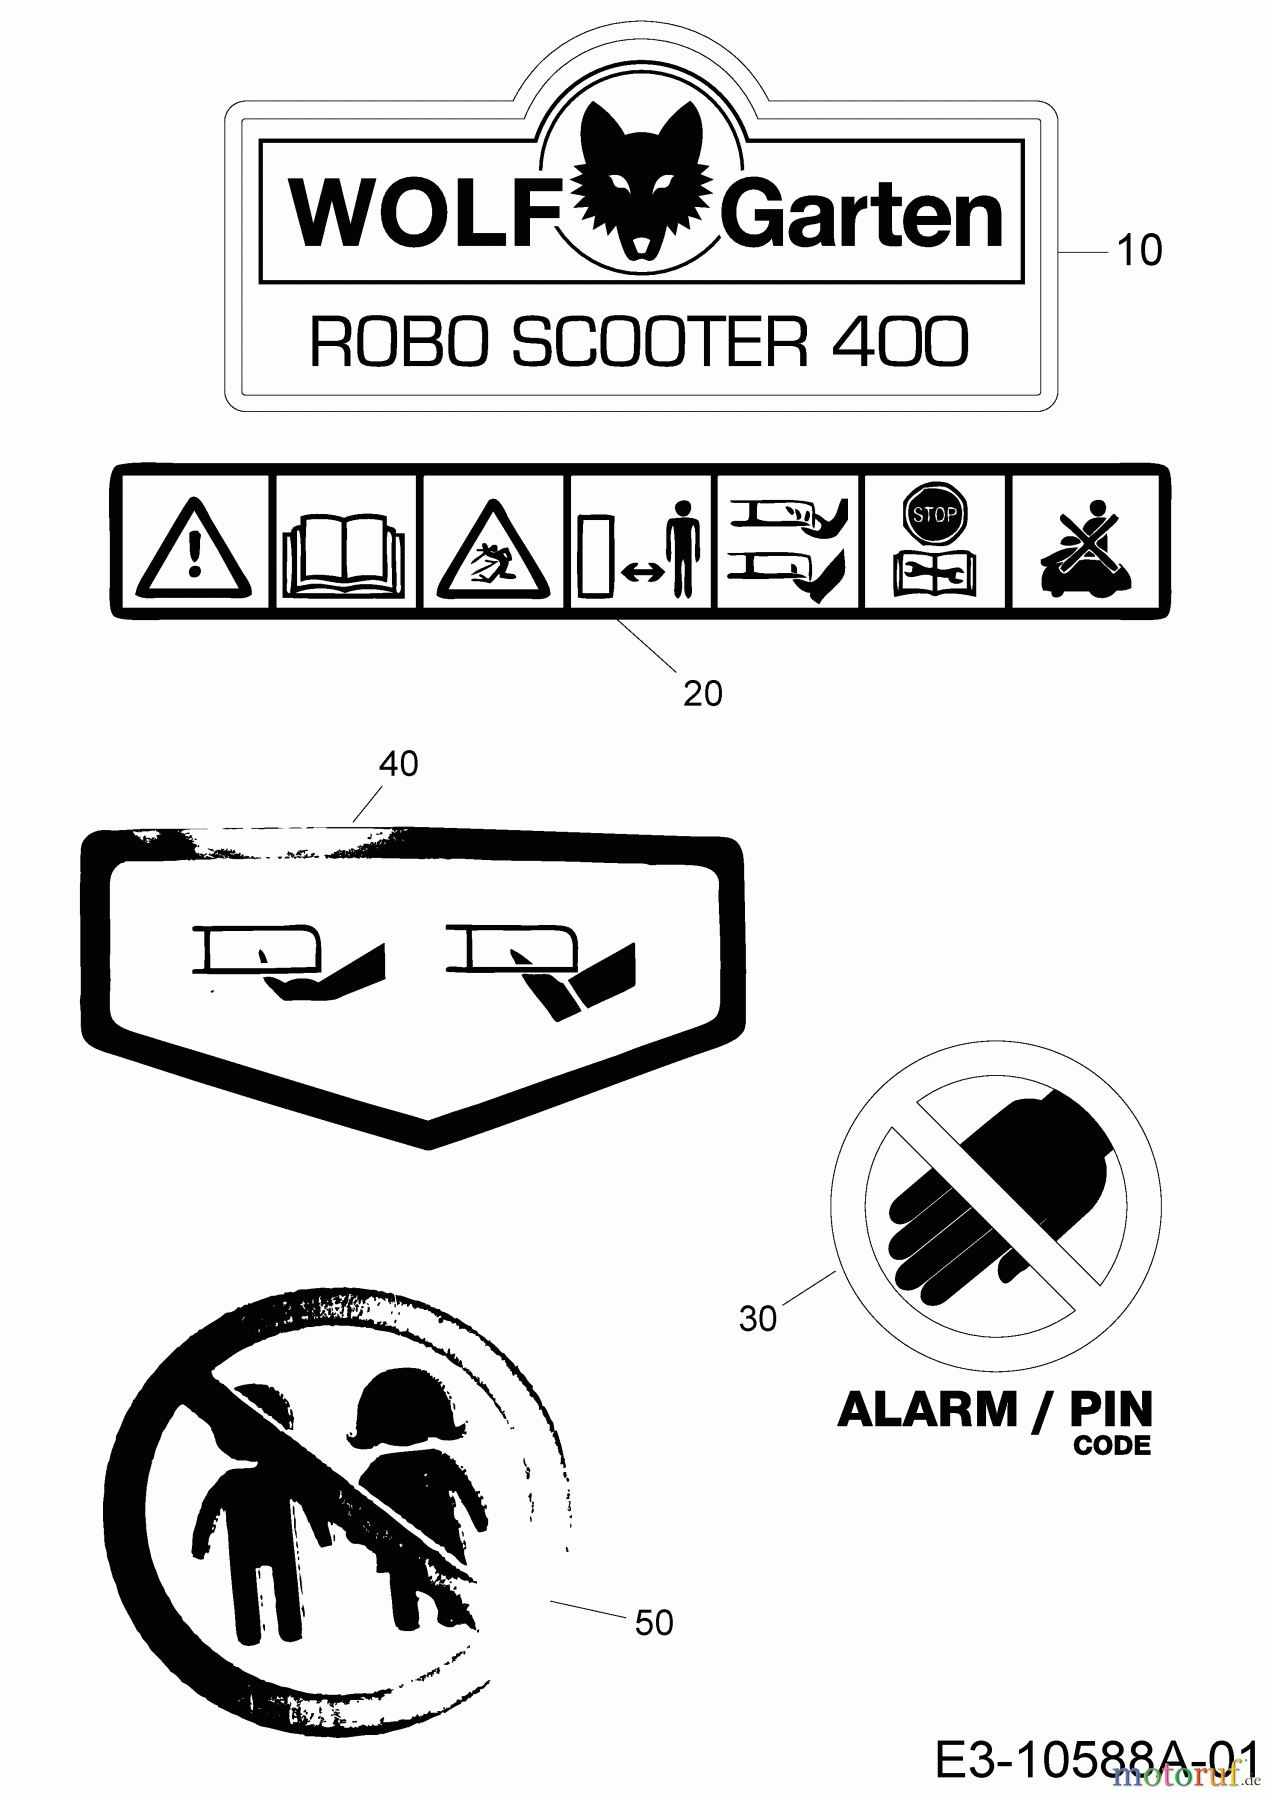  Wolf-Garten Robotic lawn mower Robo Scooter 400 18AO04LF650  (2014) Labels